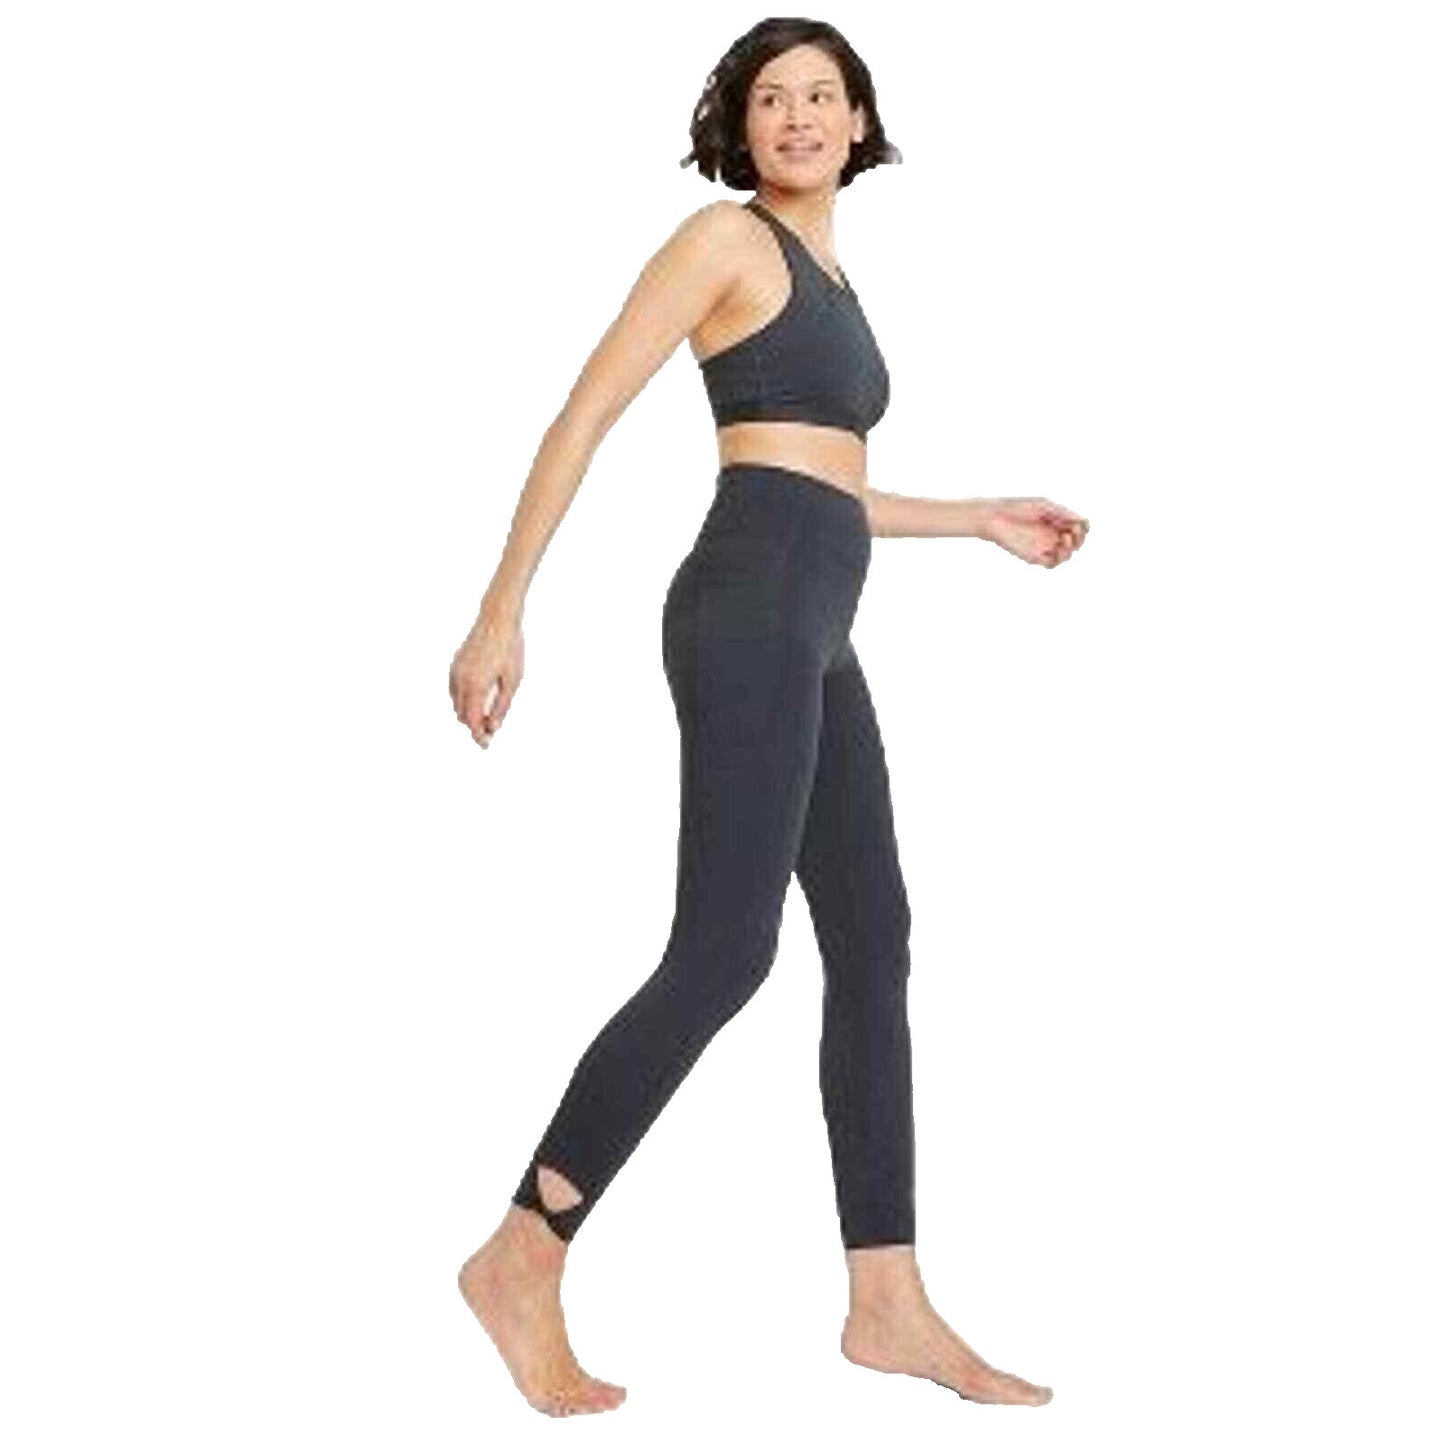 Women's Simplicity Twist High-Rise Leggings - All in Motion Slate XS, Grey